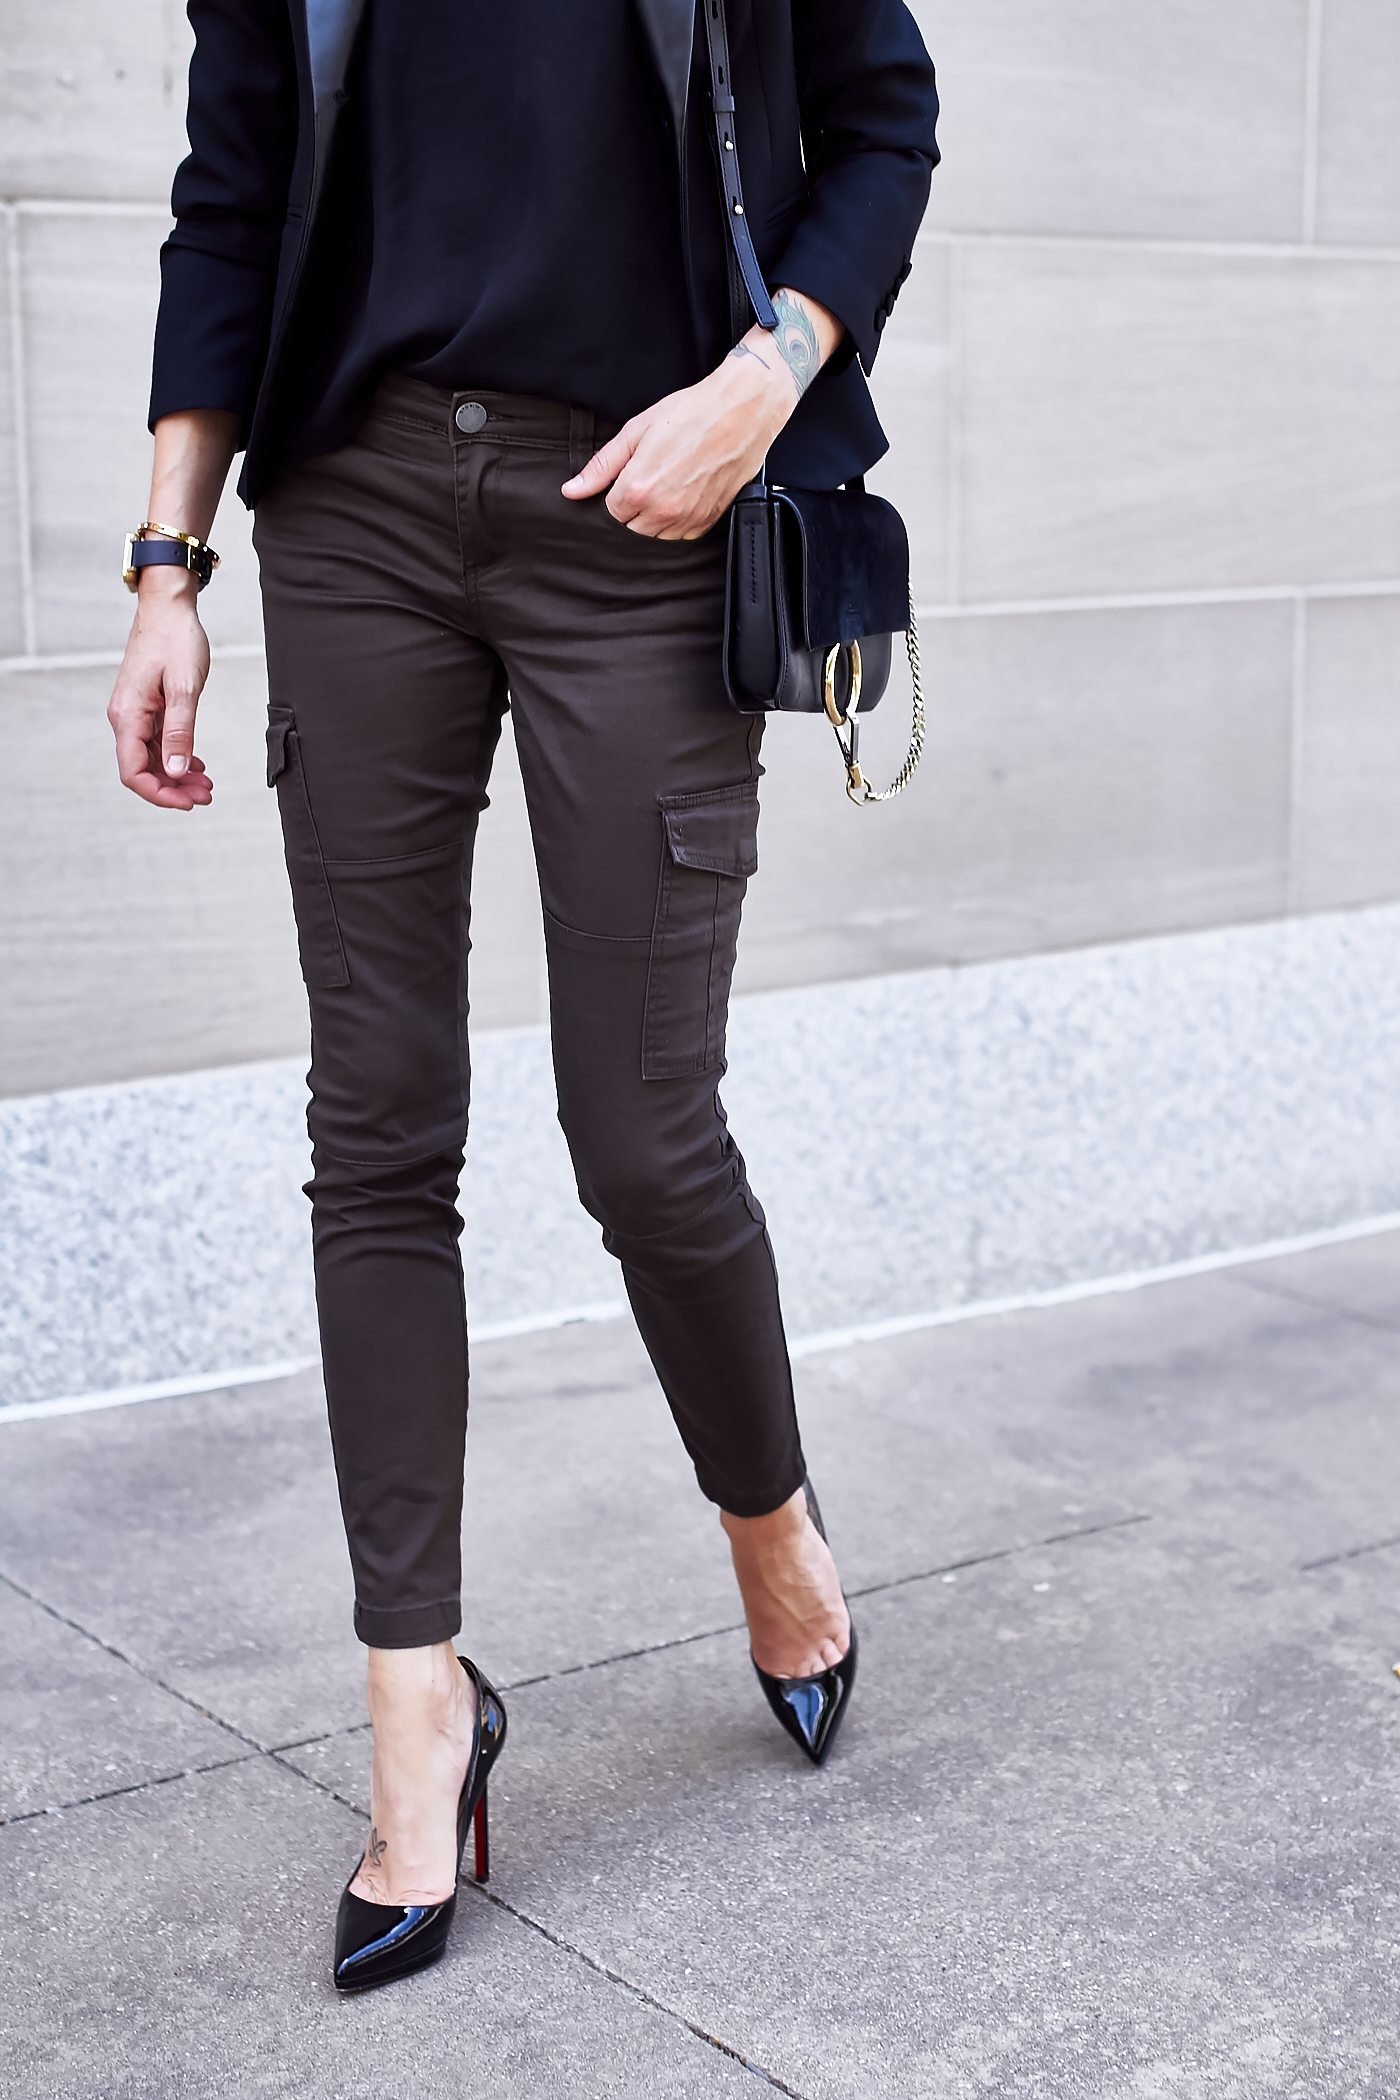 fashion-jackson-cargo-pocket-skinny-pants-black-louboutin-pumps-chloe-faye-handbag